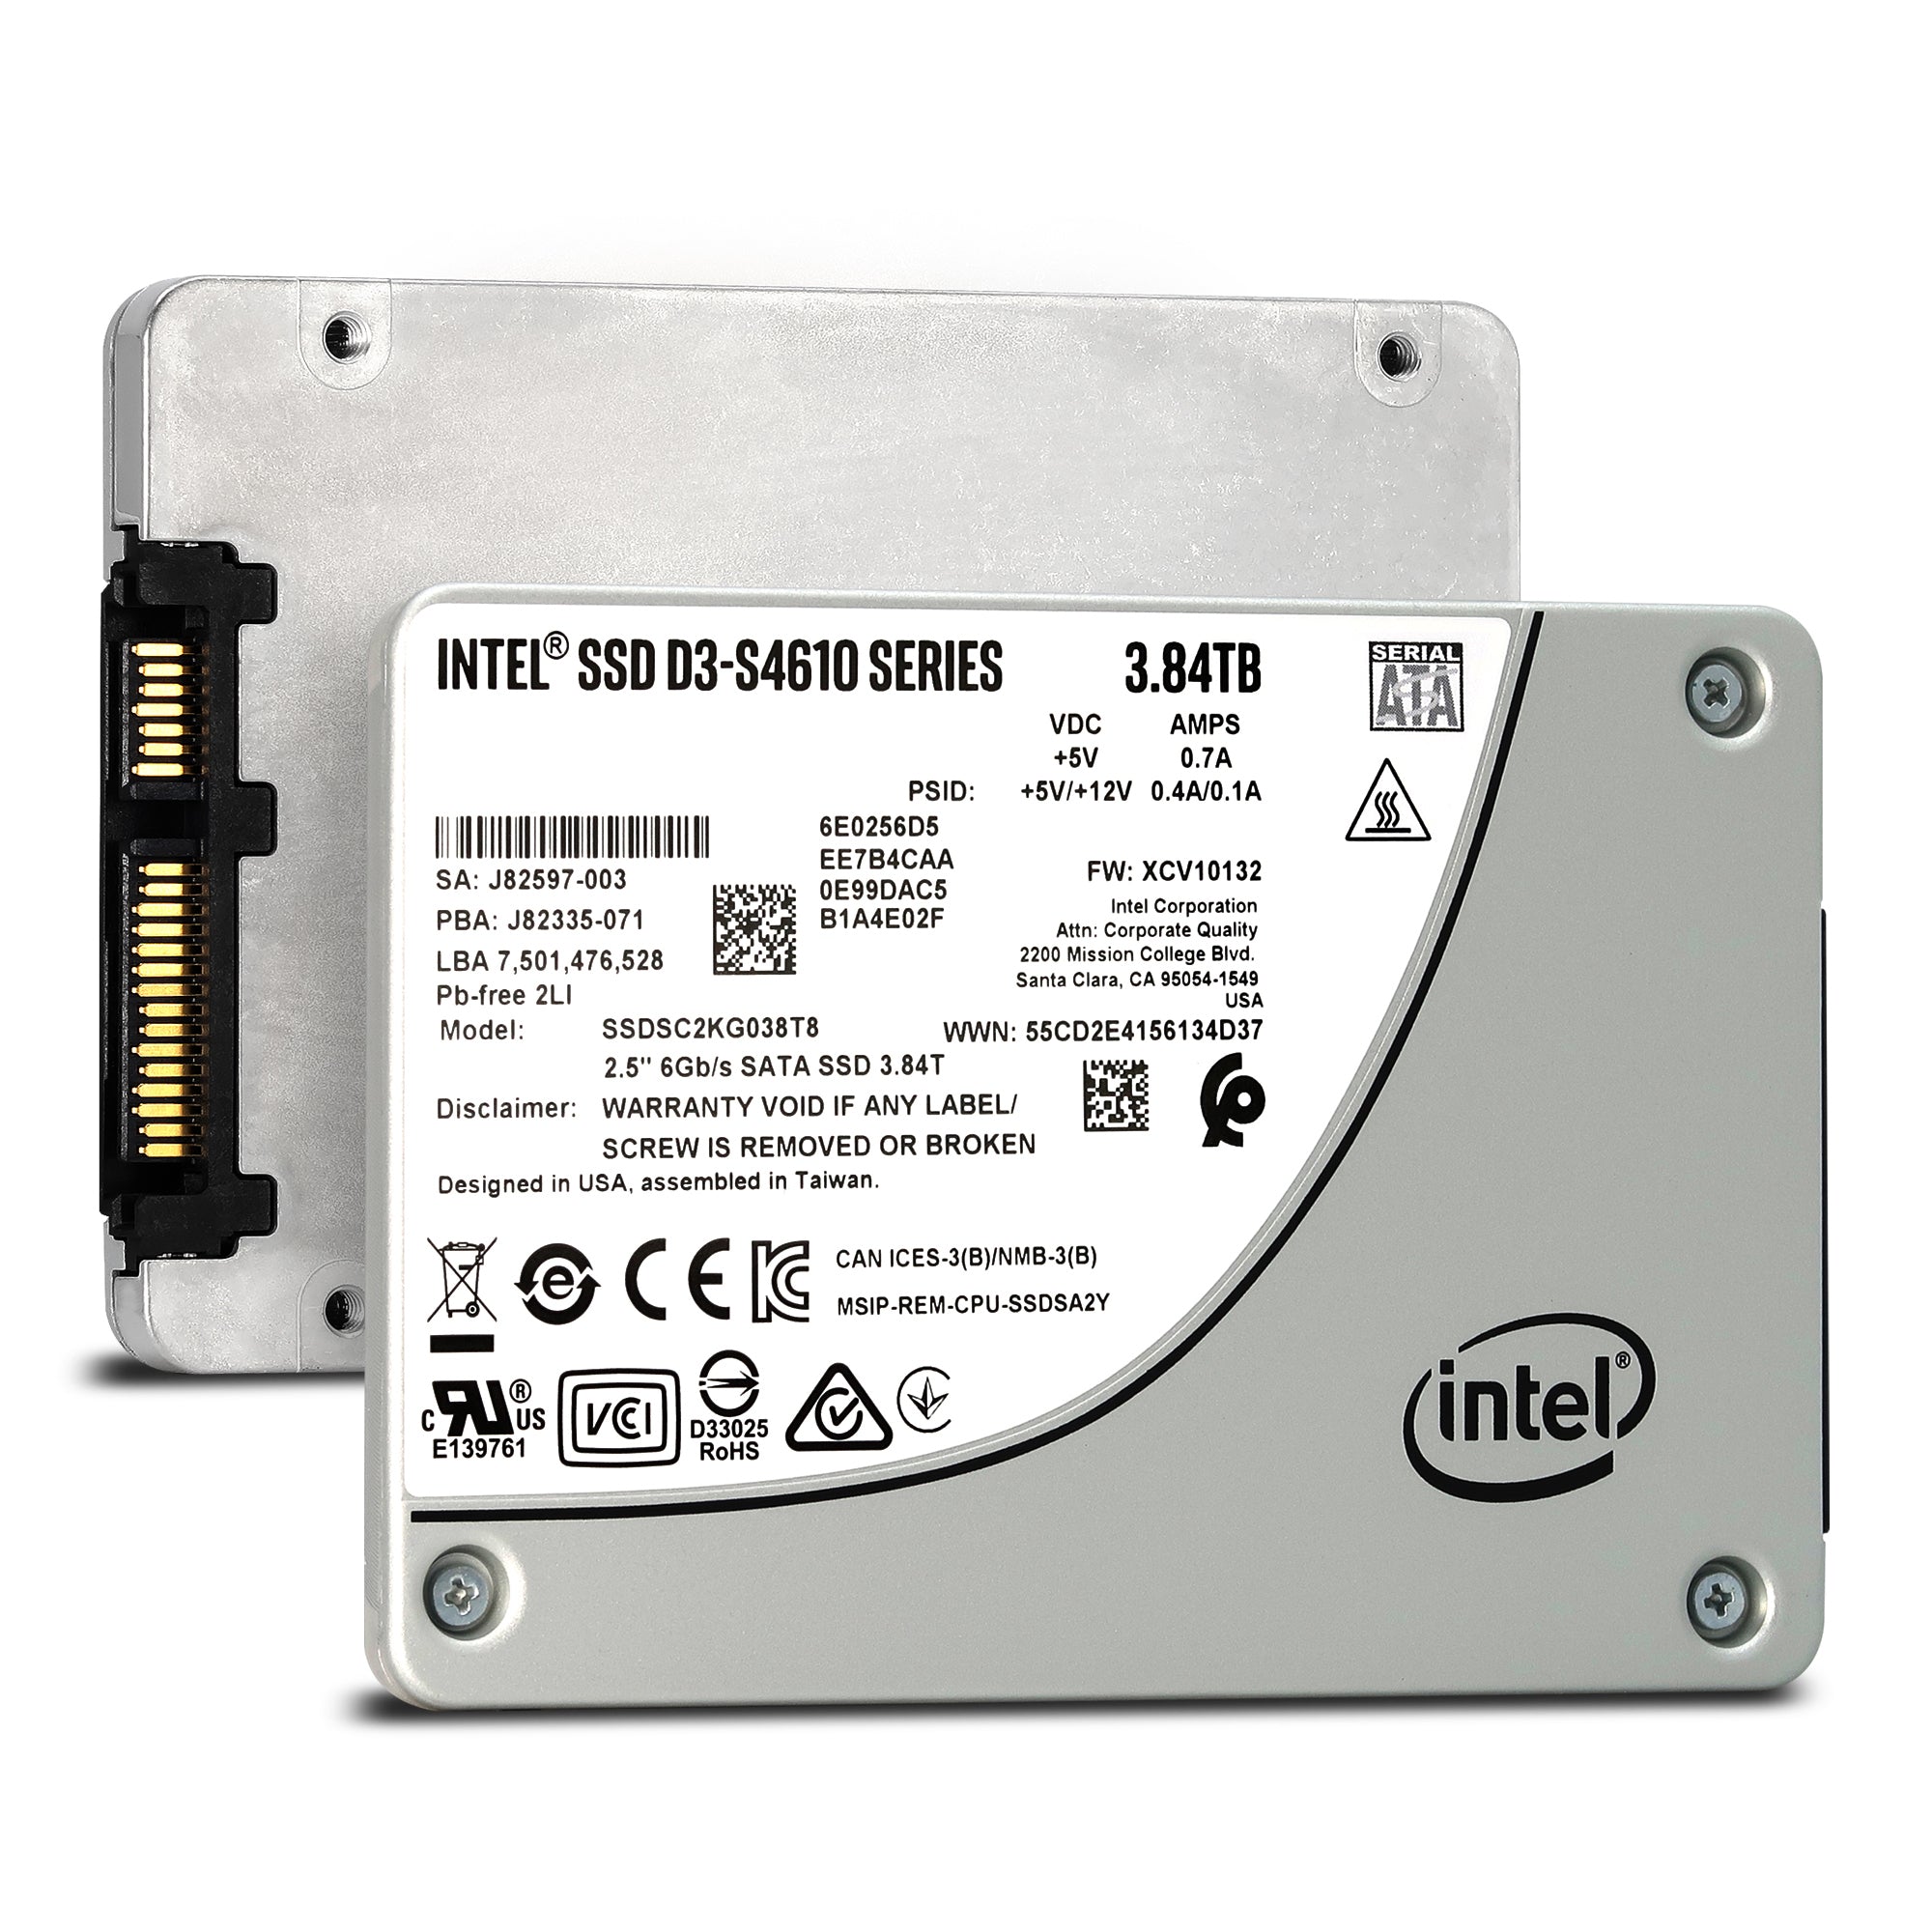 Intel D3-S4610 internal solid state drive 2.5 3840 GB Serial ATA